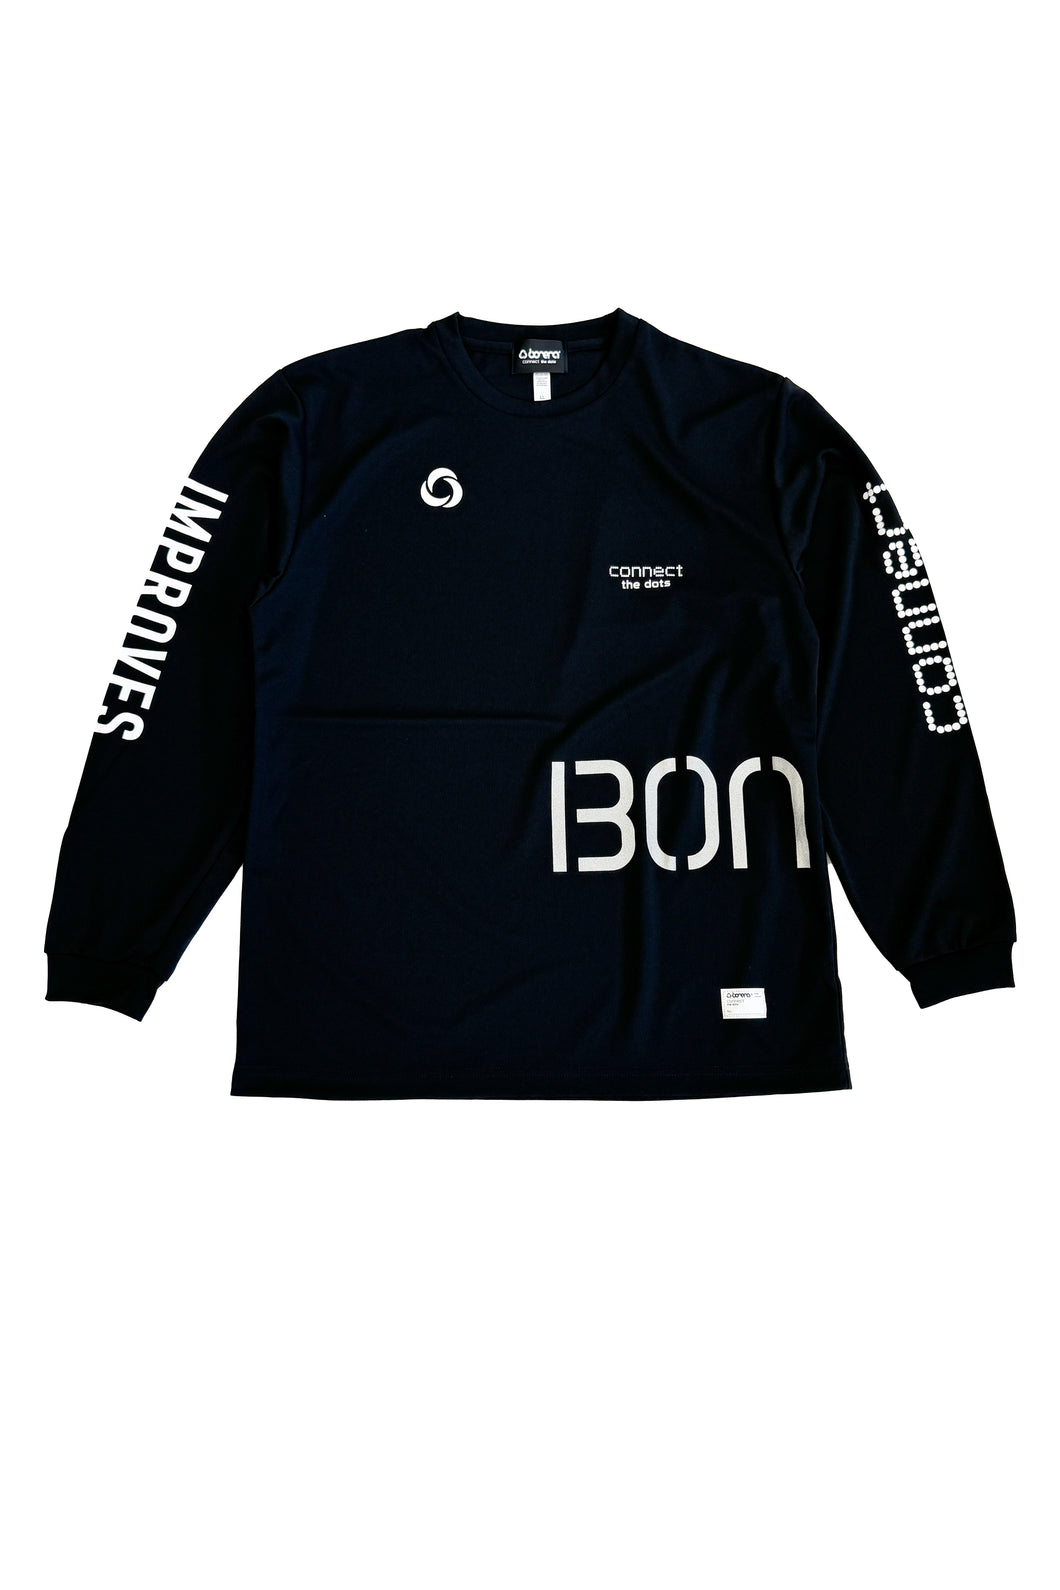 BNR-T181／ボネーラ(bonera)ドライロングスリーブTシャツ（WEB限定カラーBLACK/SILVER）